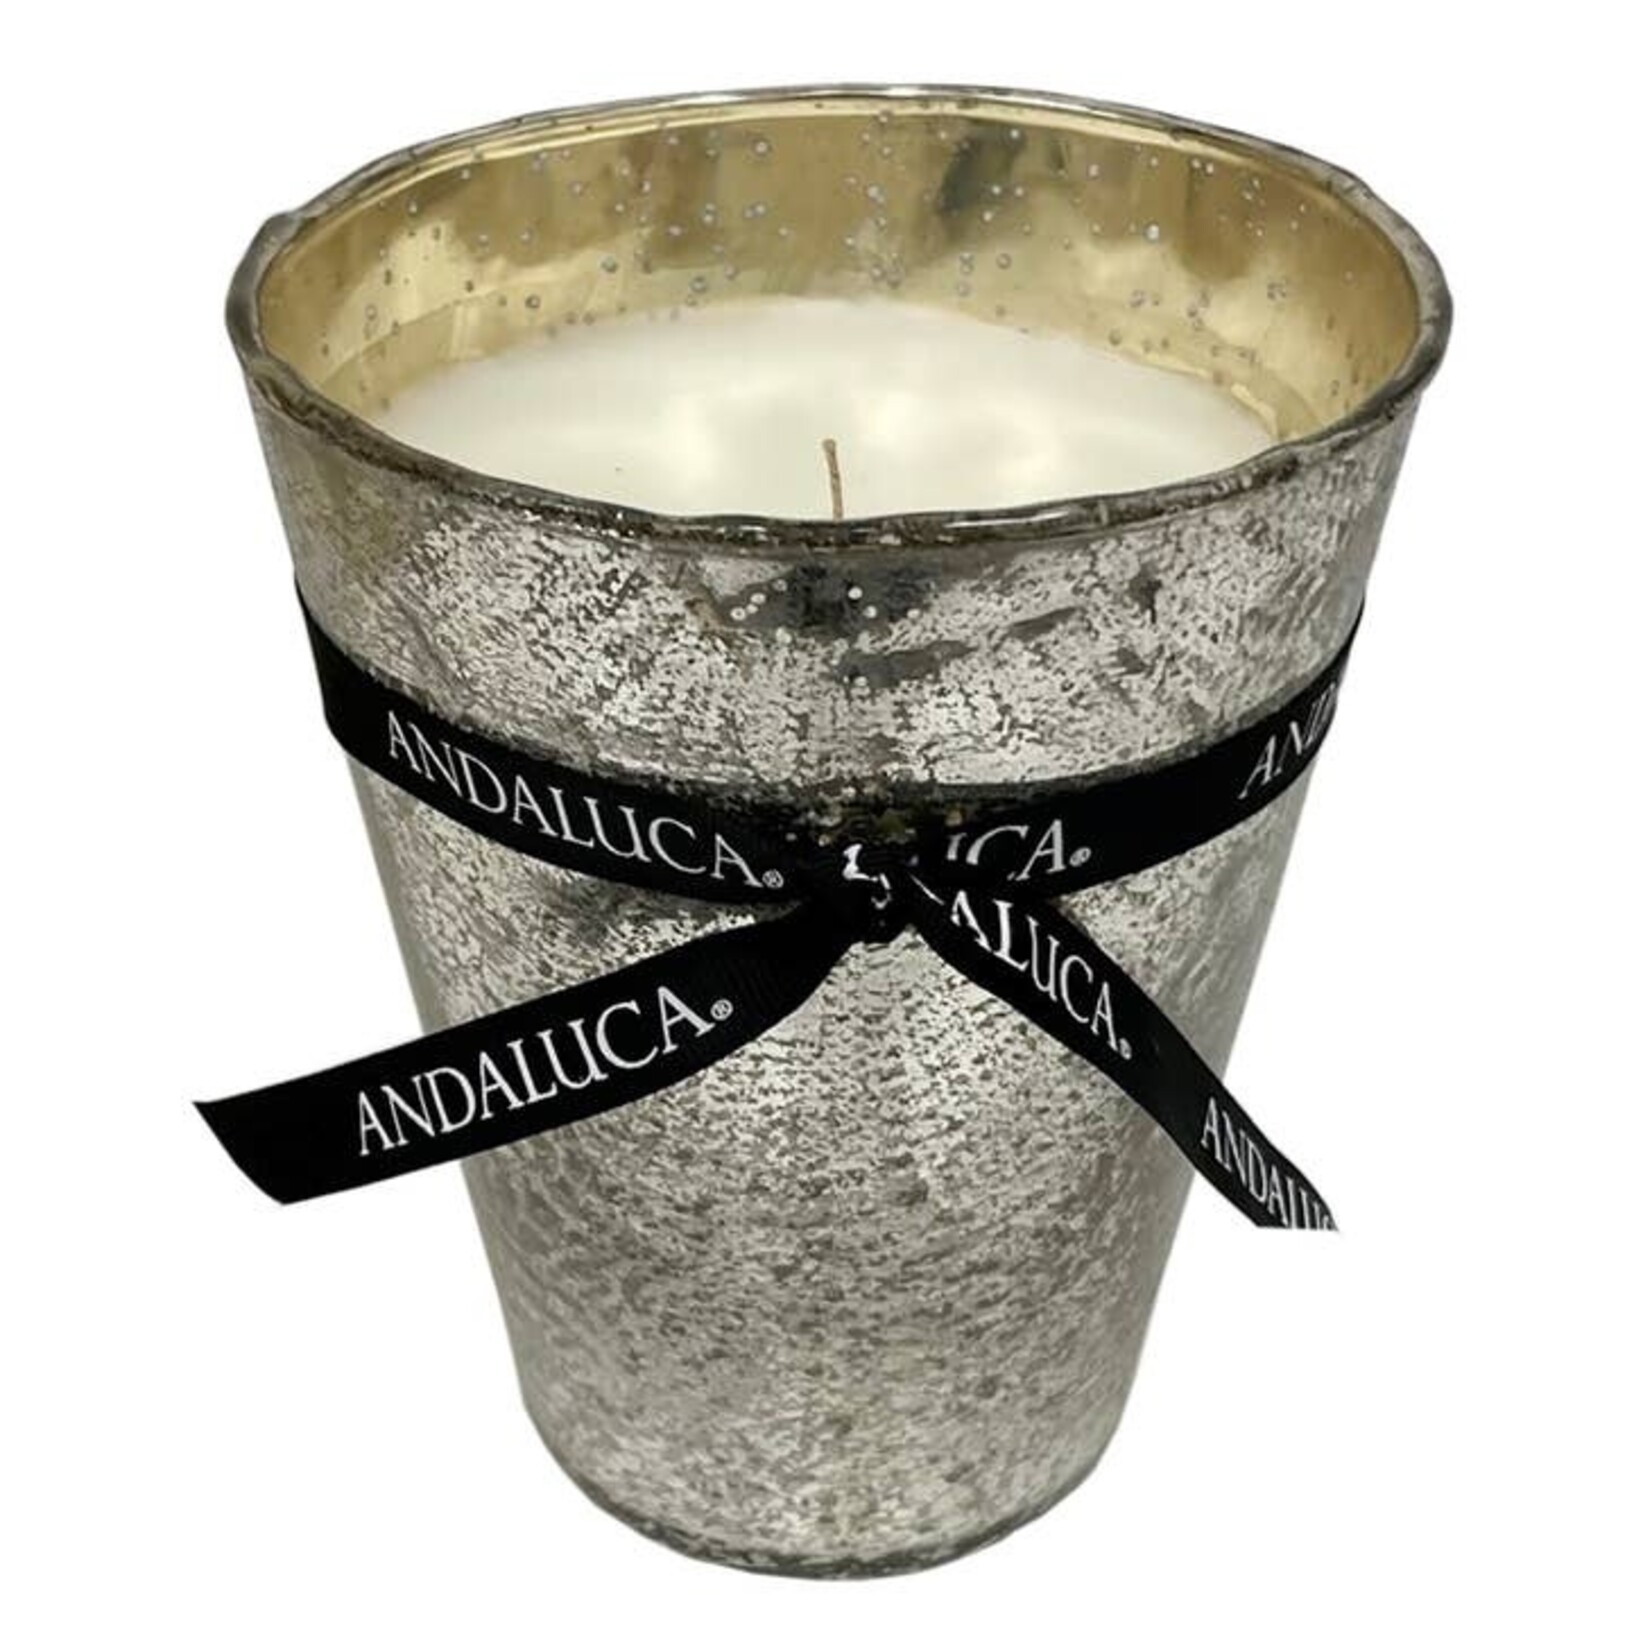 Cashmere Vanilla Mercury Candle Pot 18oz.